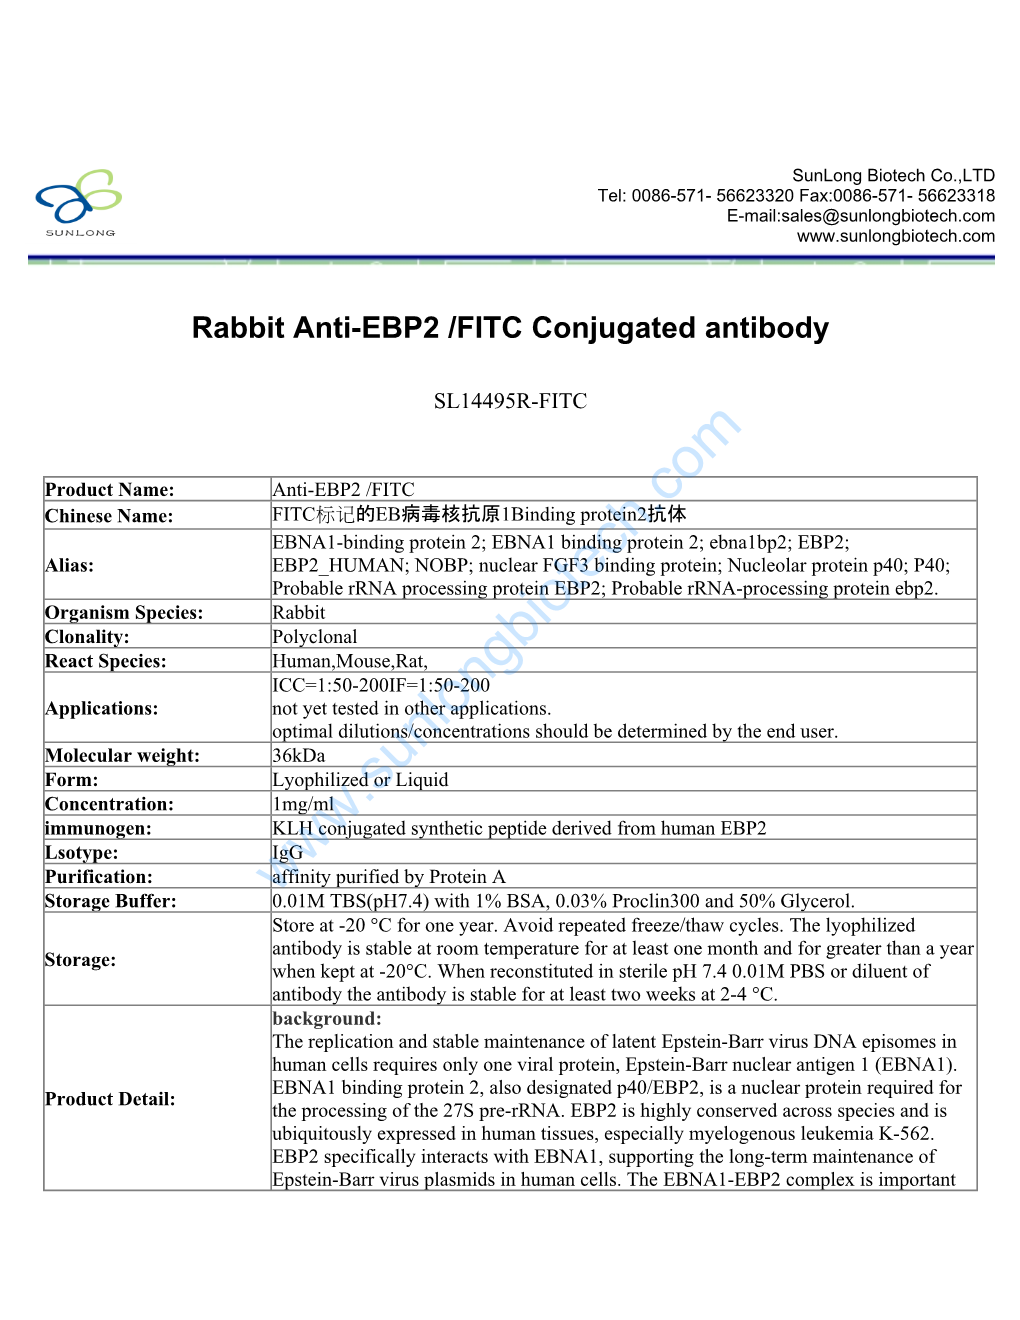 Rabbit Anti-EBP2 /FITC Conjugated Antibody